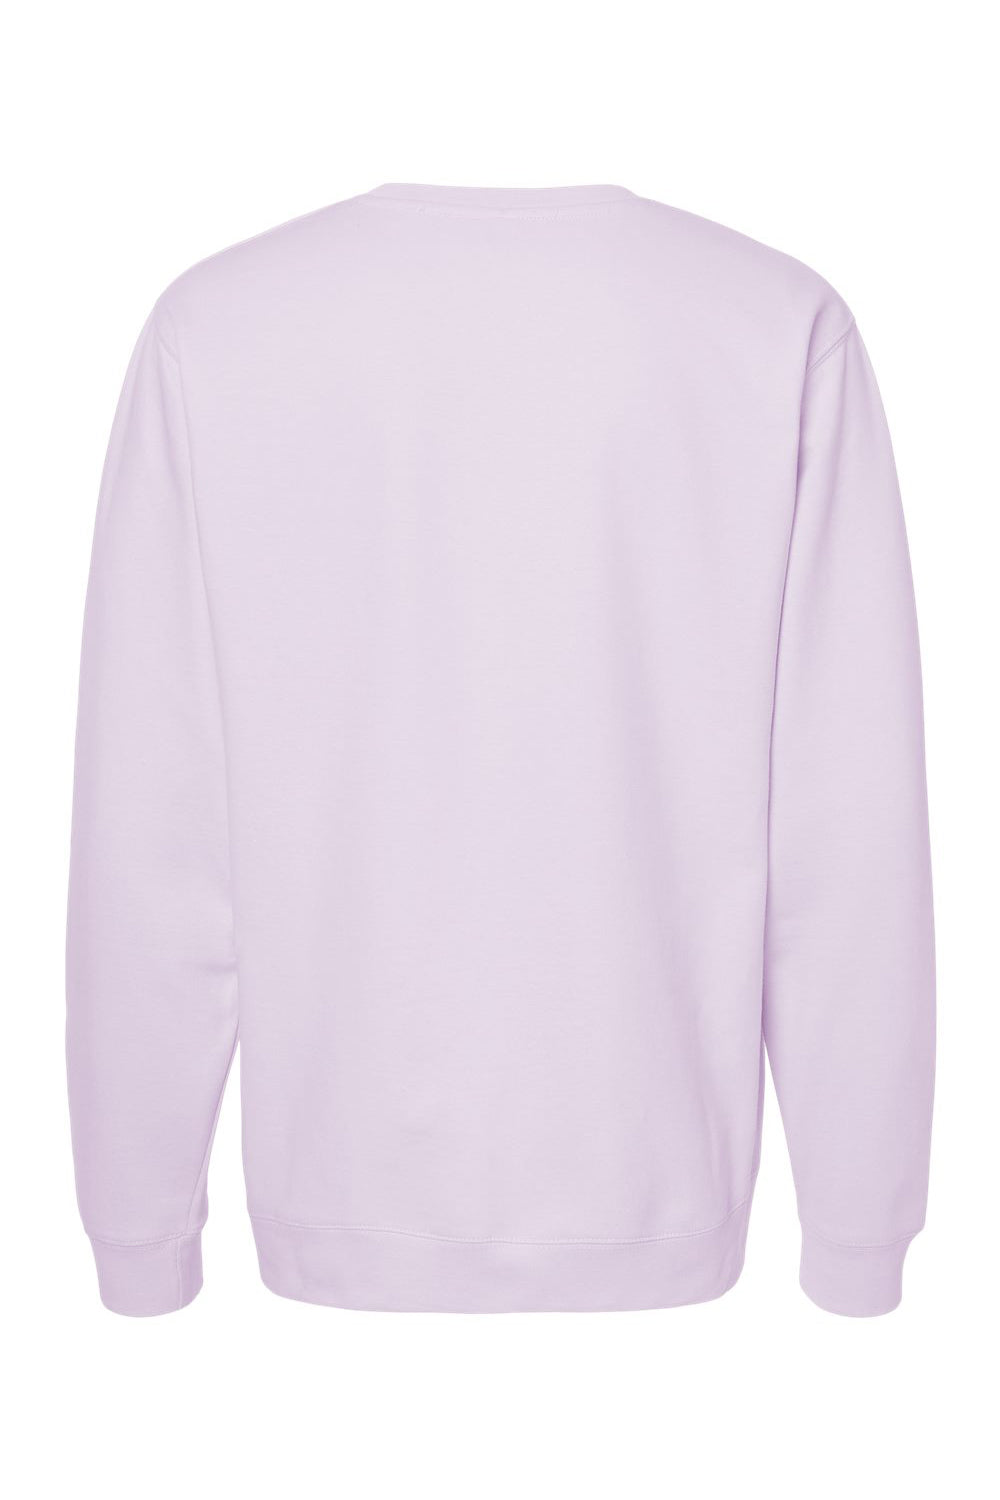 Independent Trading Co. SS3000 Mens Crewneck Sweatshirt Lavender Purple Flat Back